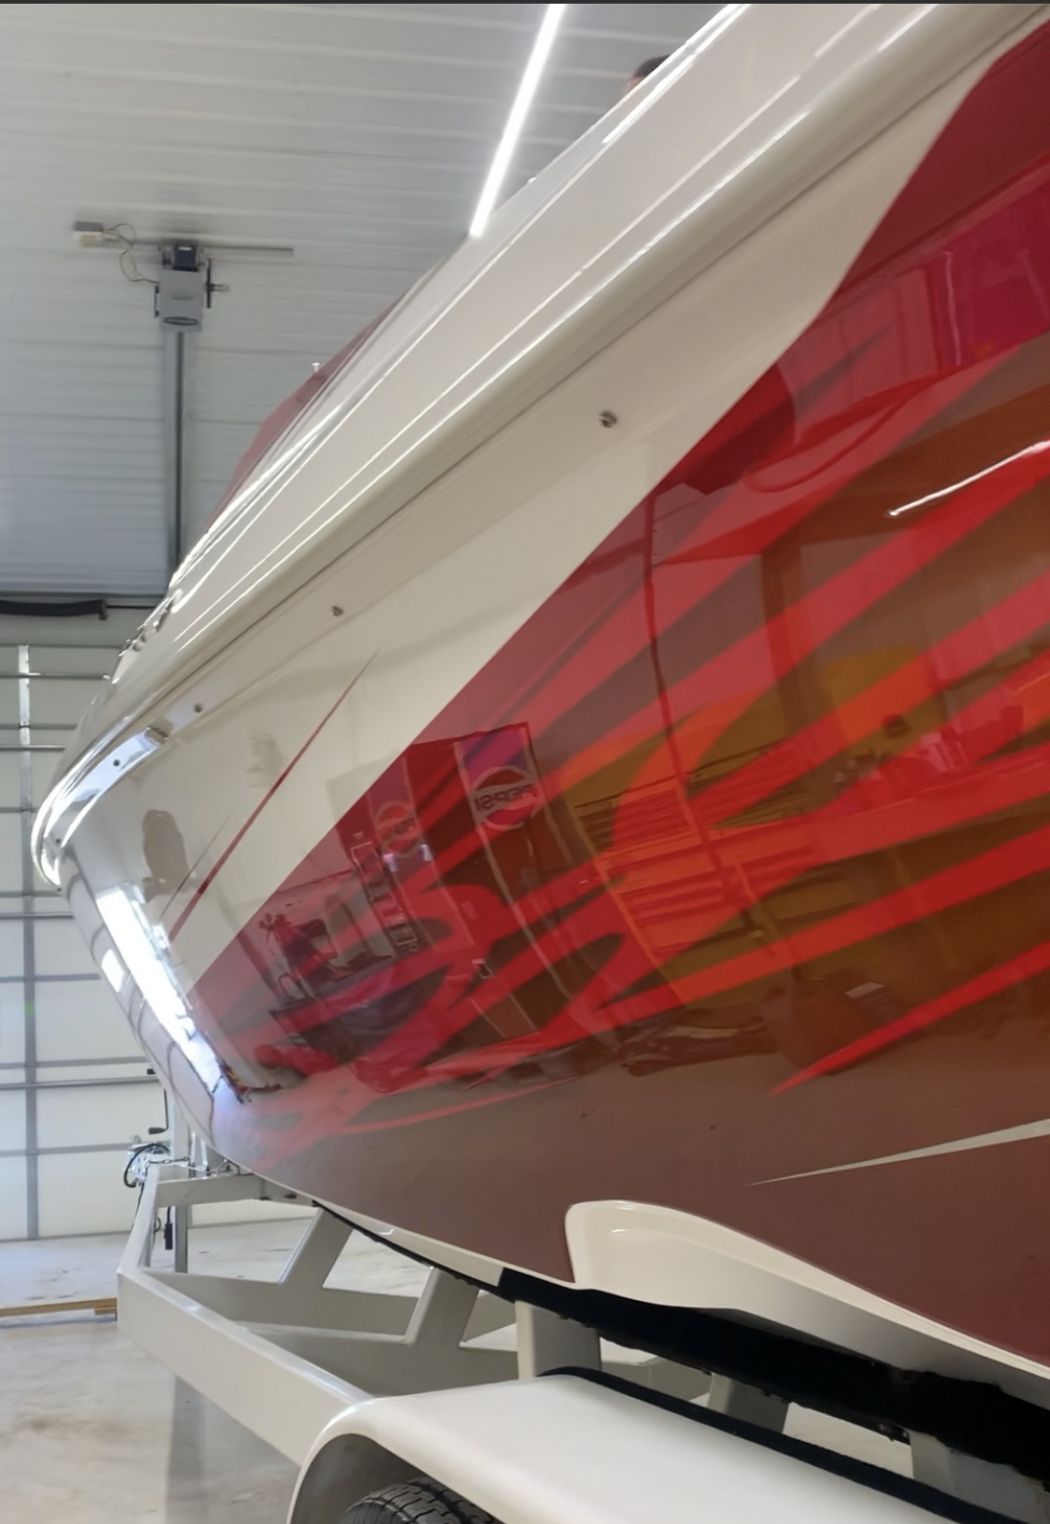 270 Sunsation Offshore Powerboat Ceramic Pro Coating